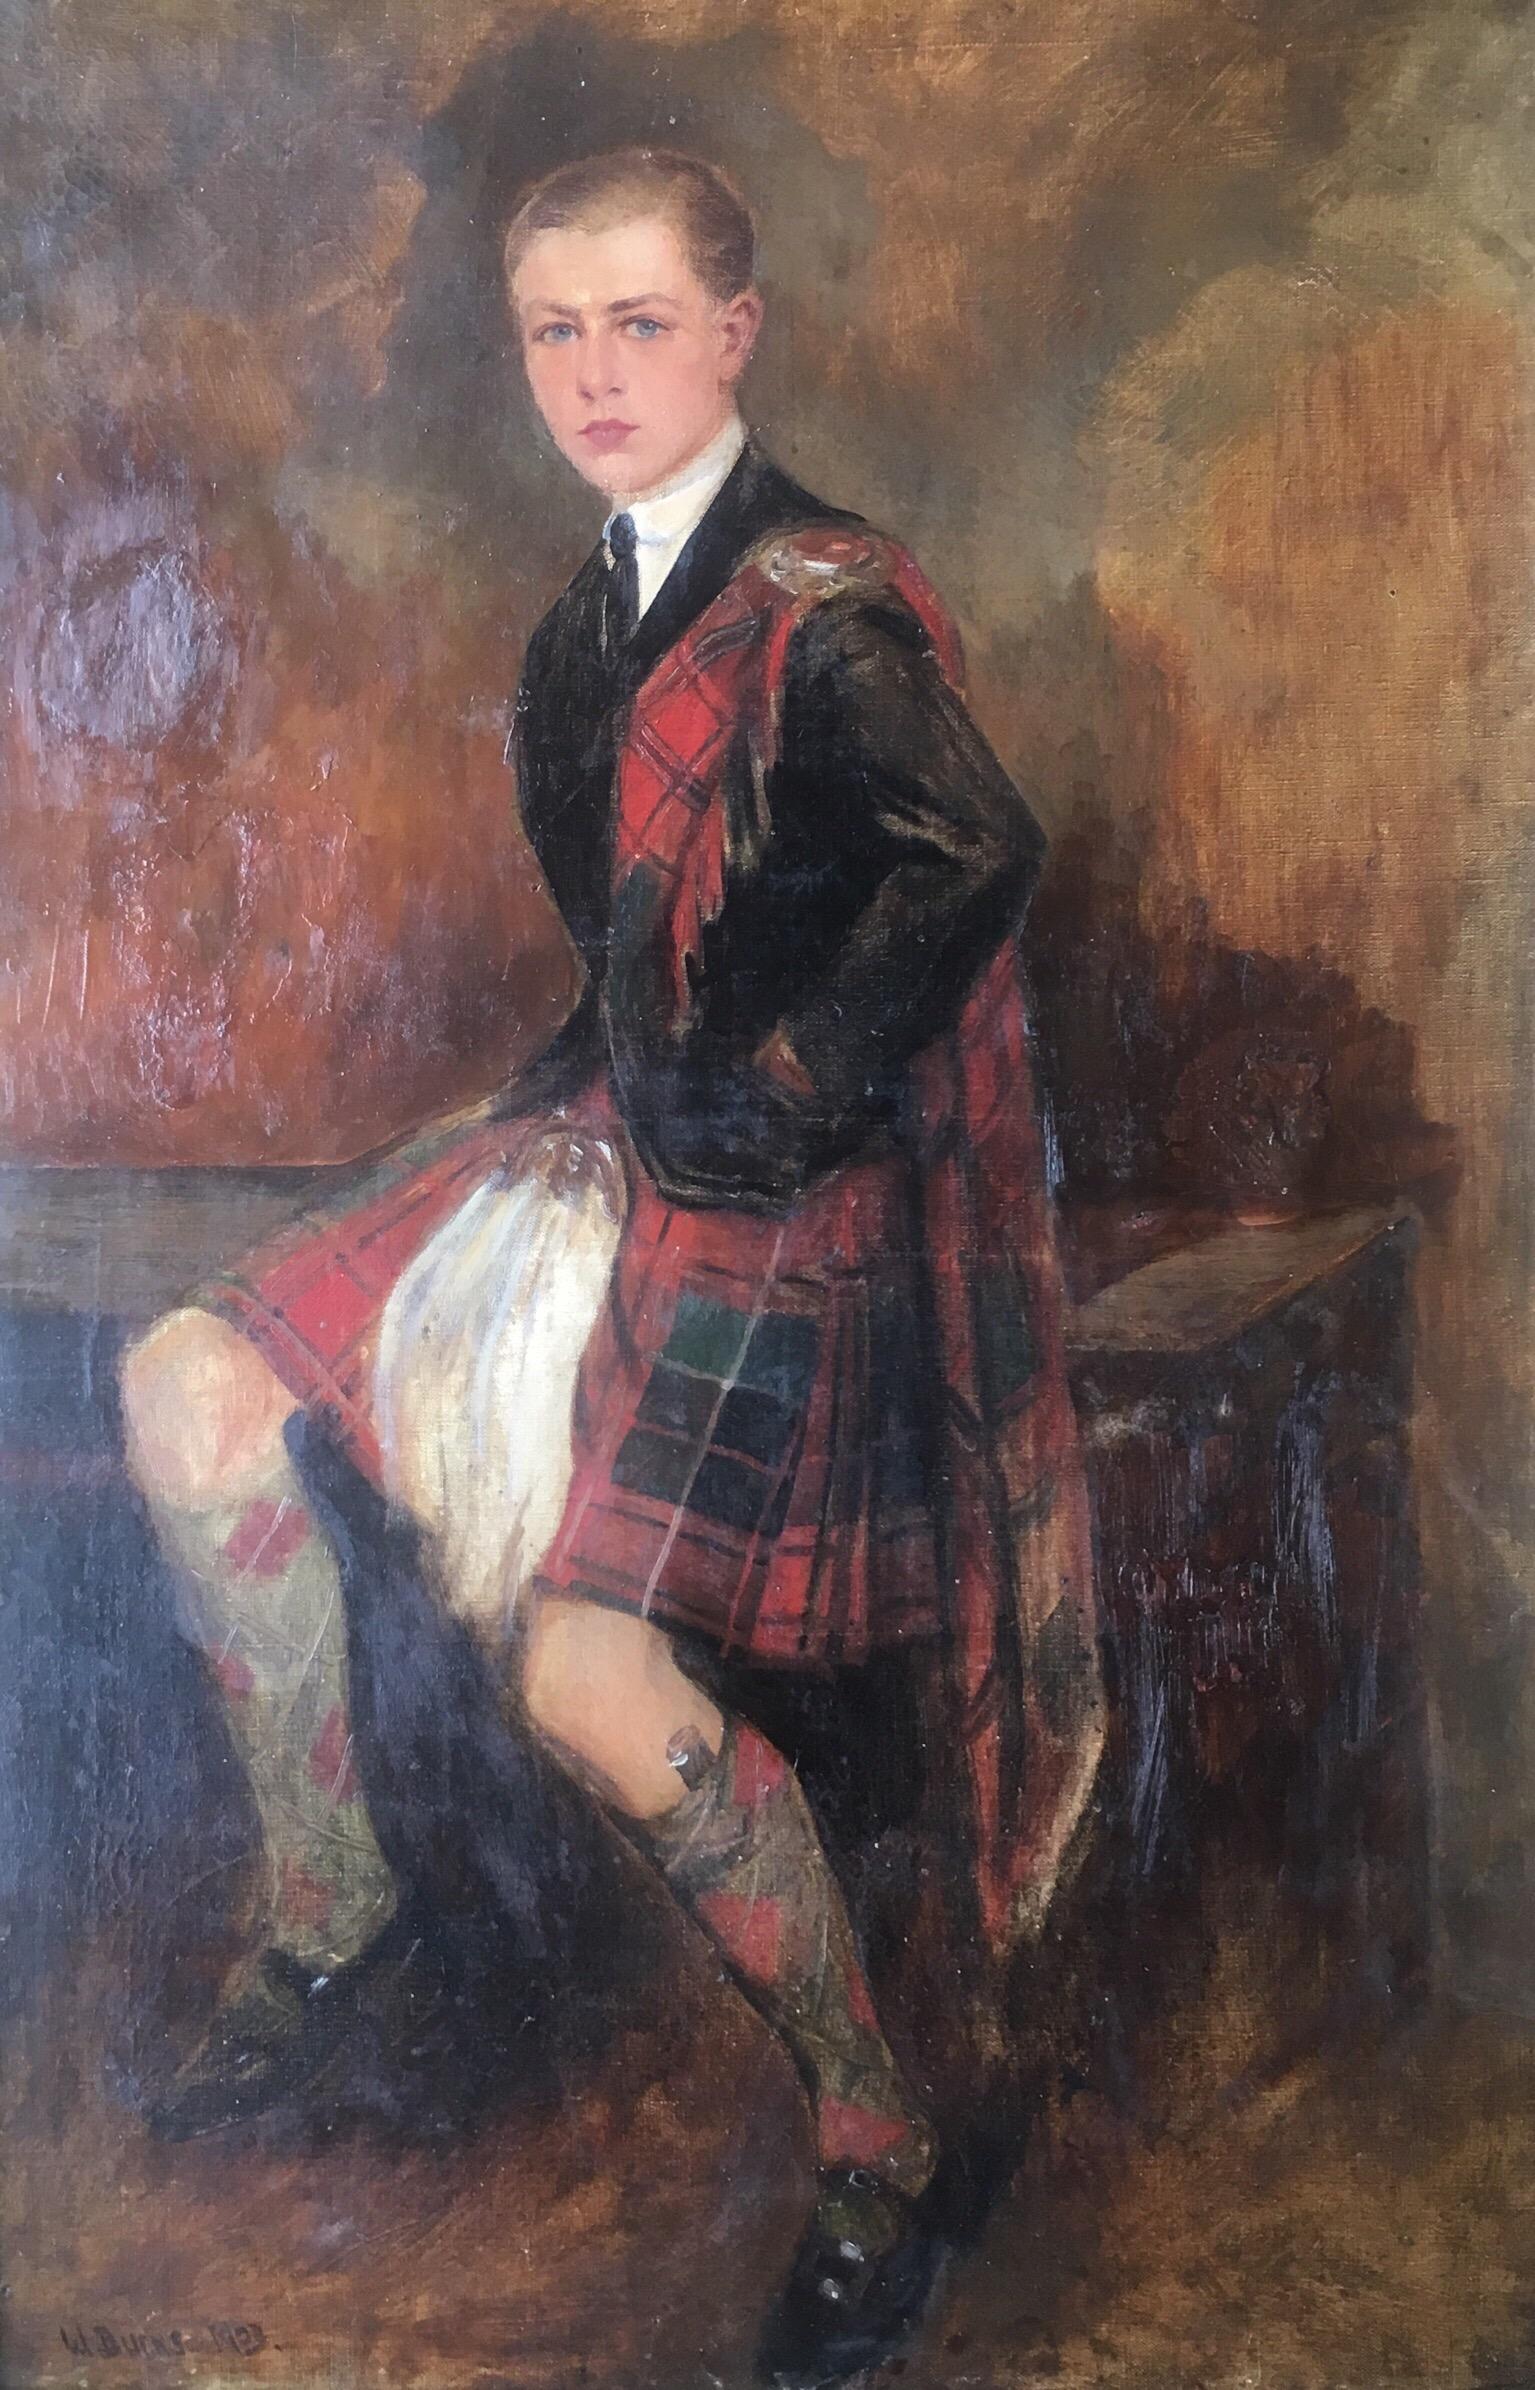 Unknown Portrait Painting - The Scottish Gentlemen, Large Impressionist Portrait, Signed Oil Painting 